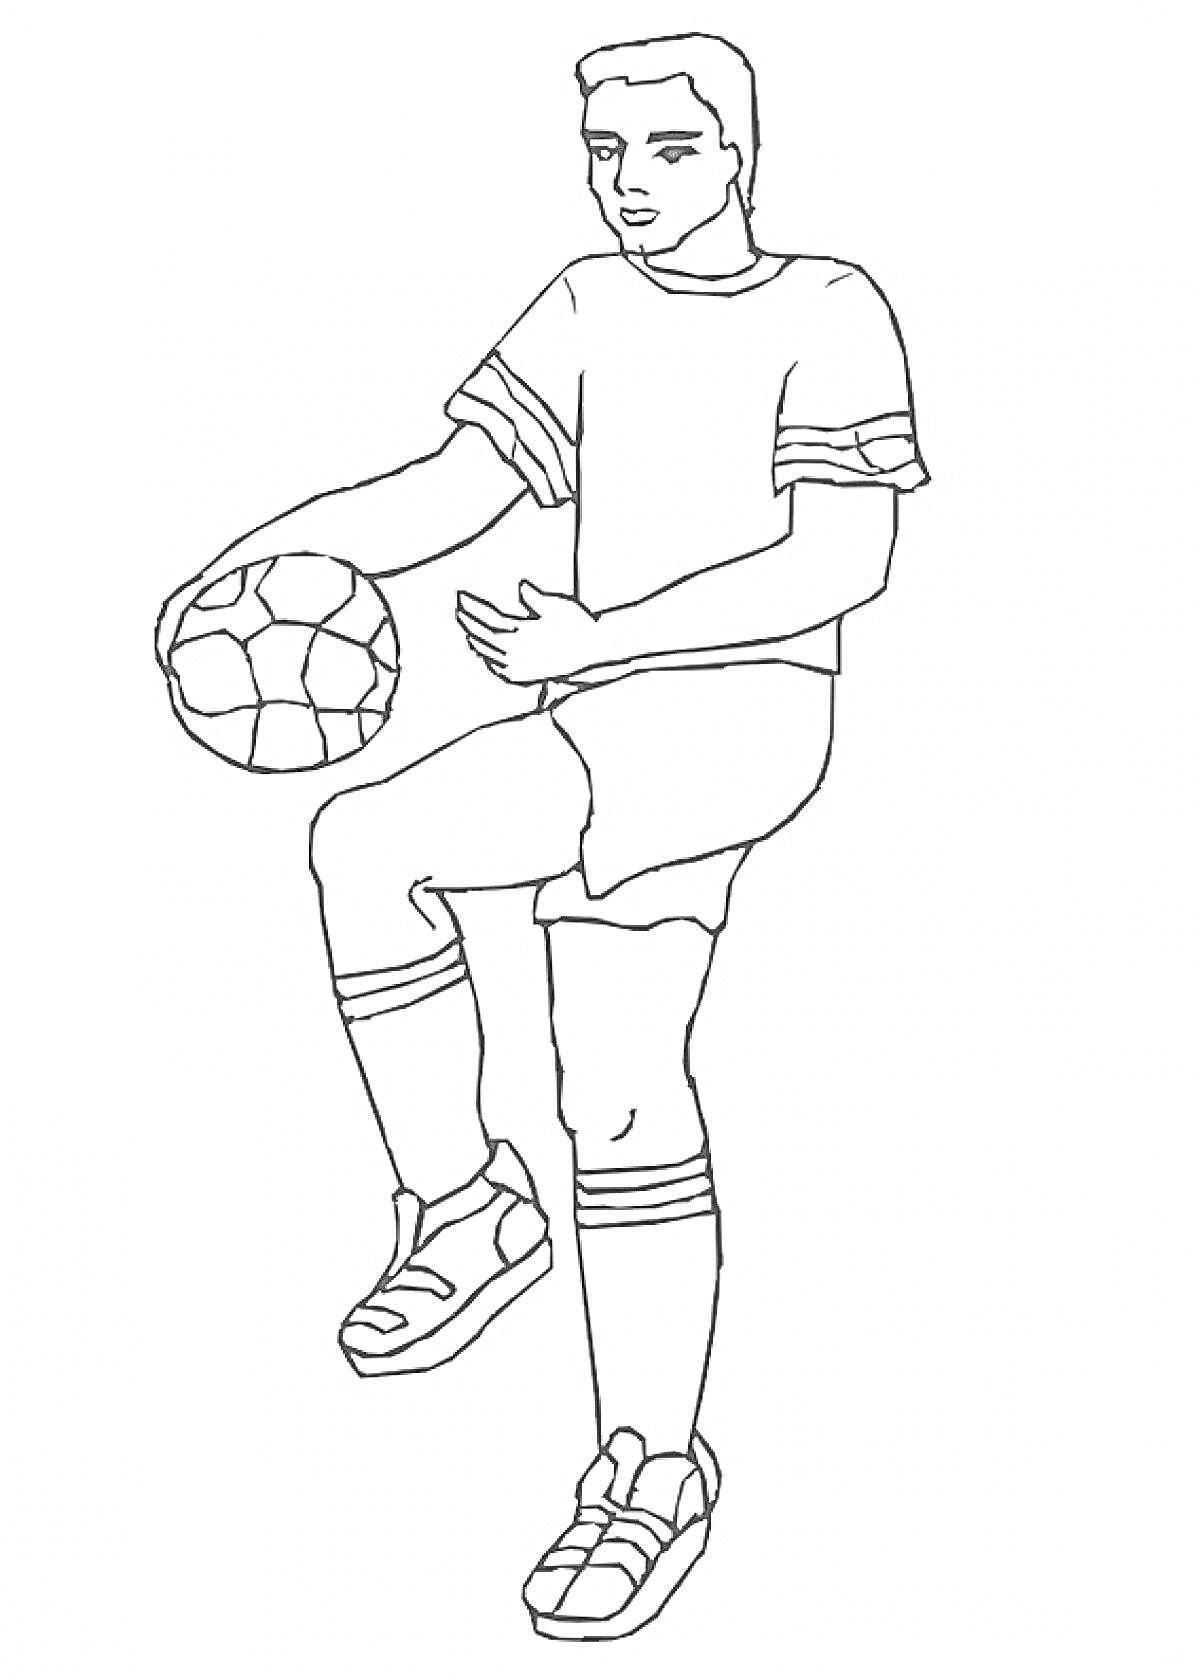 Футболист с мячом, жонглирующий ногой